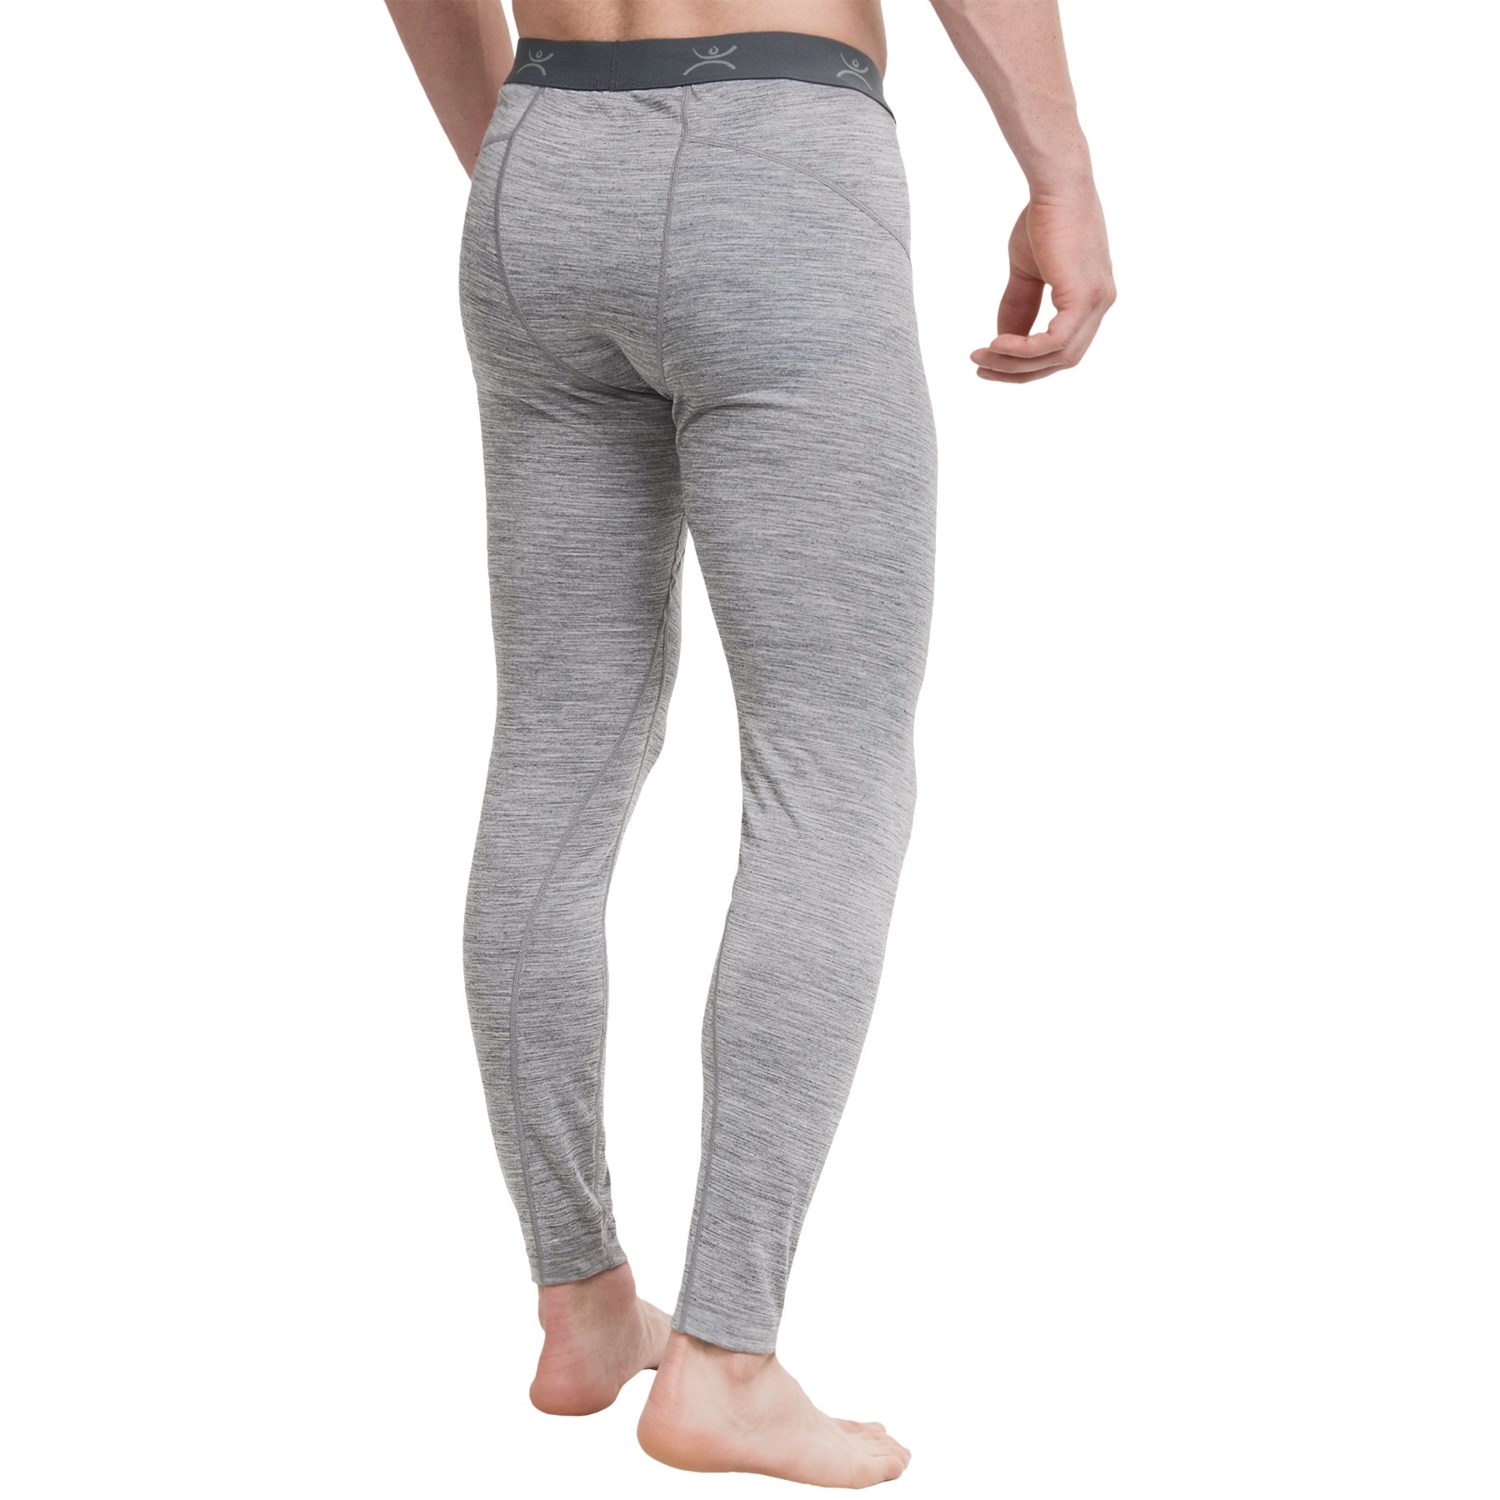 Terramar Woolskins Long Underwear Bottoms (For Men) - Save 50%